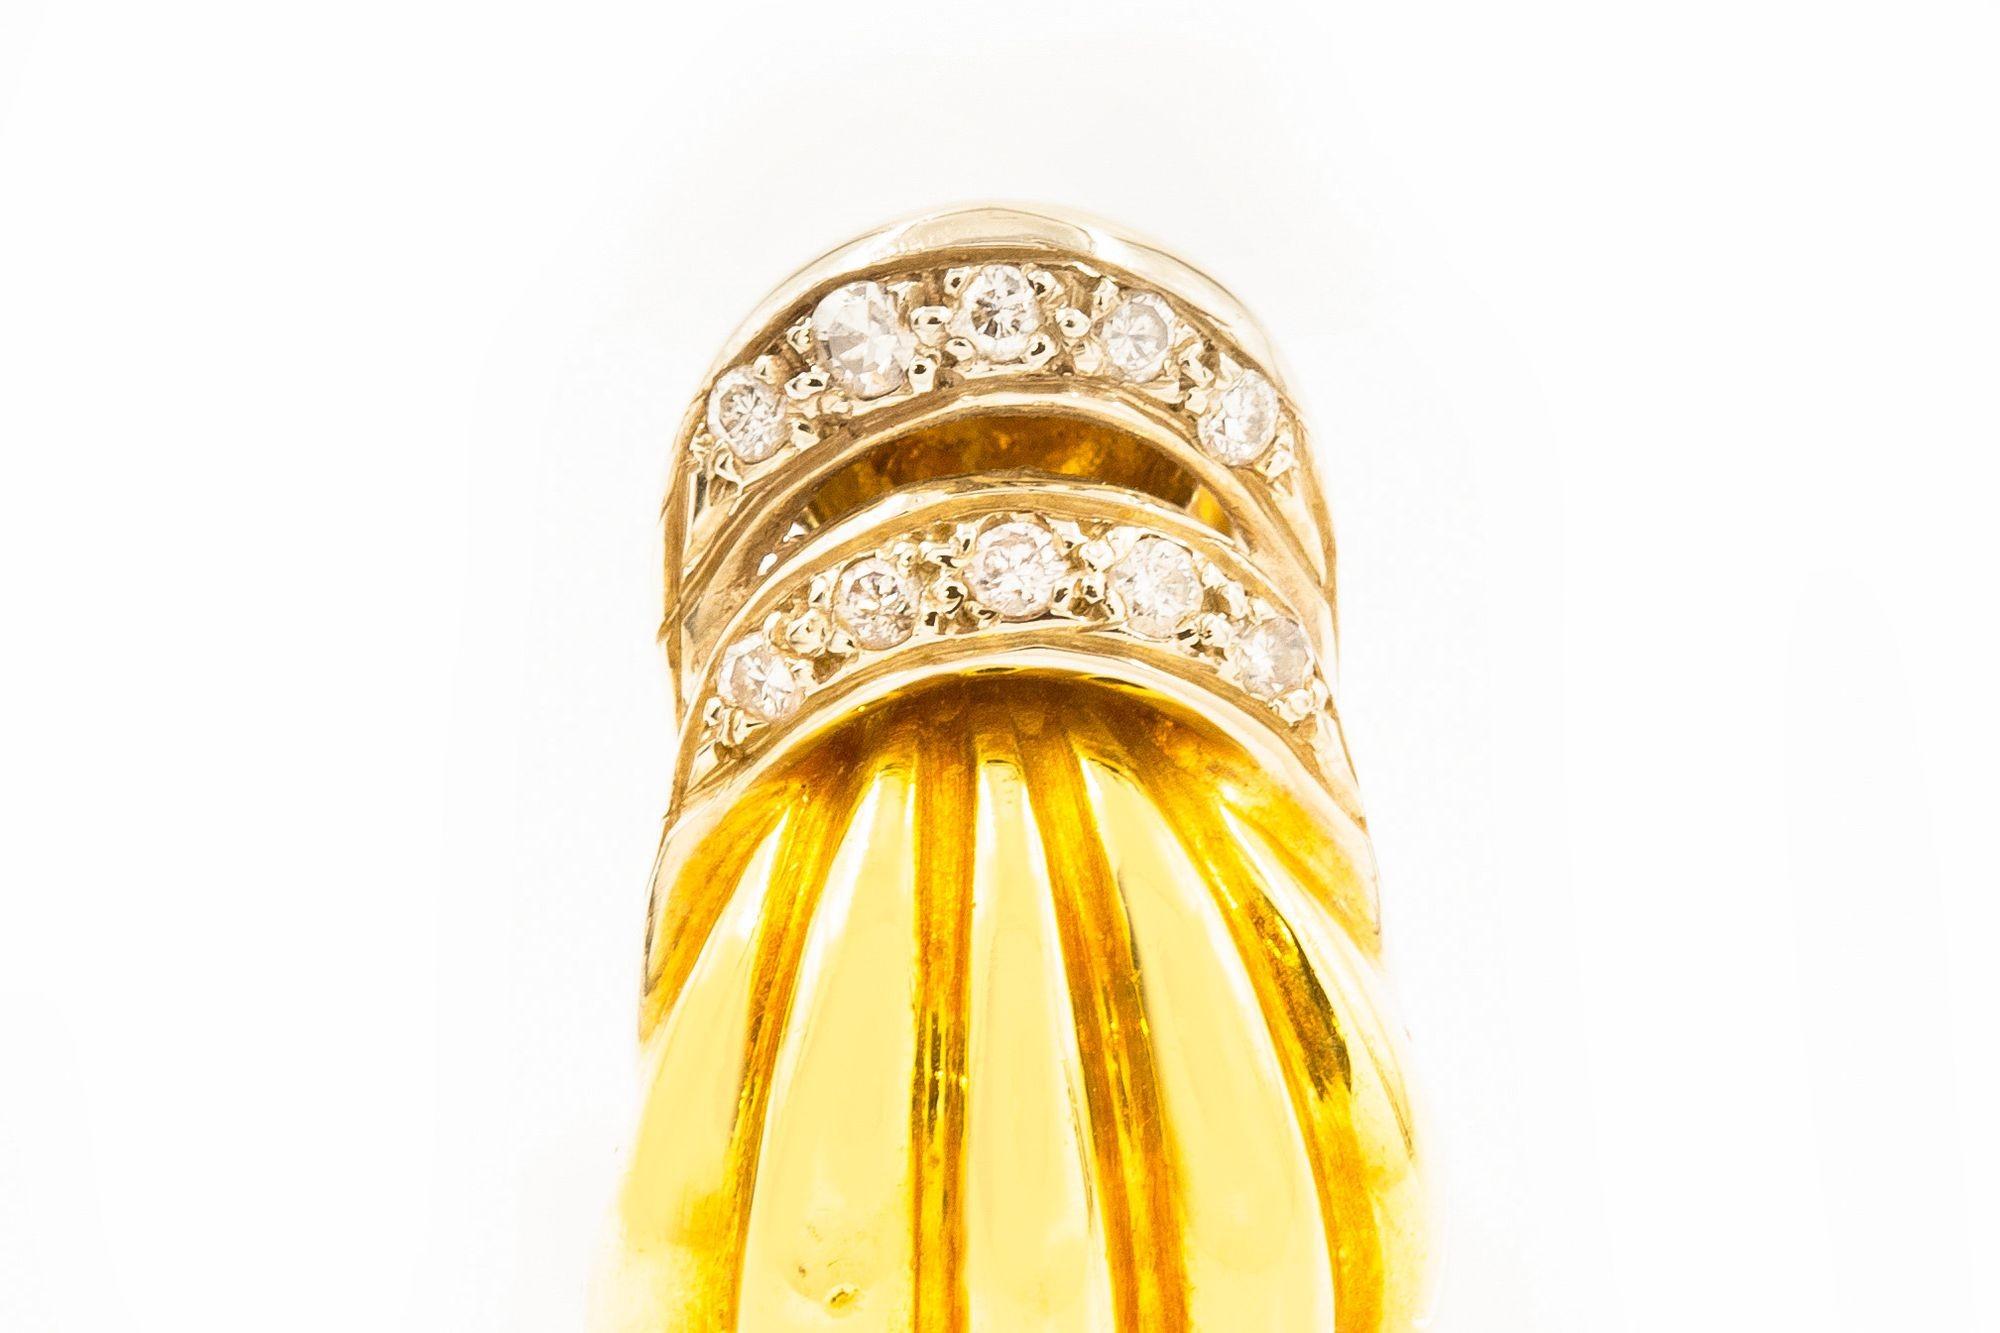 Pair of 18K Yellow Gold & Gemstone Swirl Earrings For Sale 4